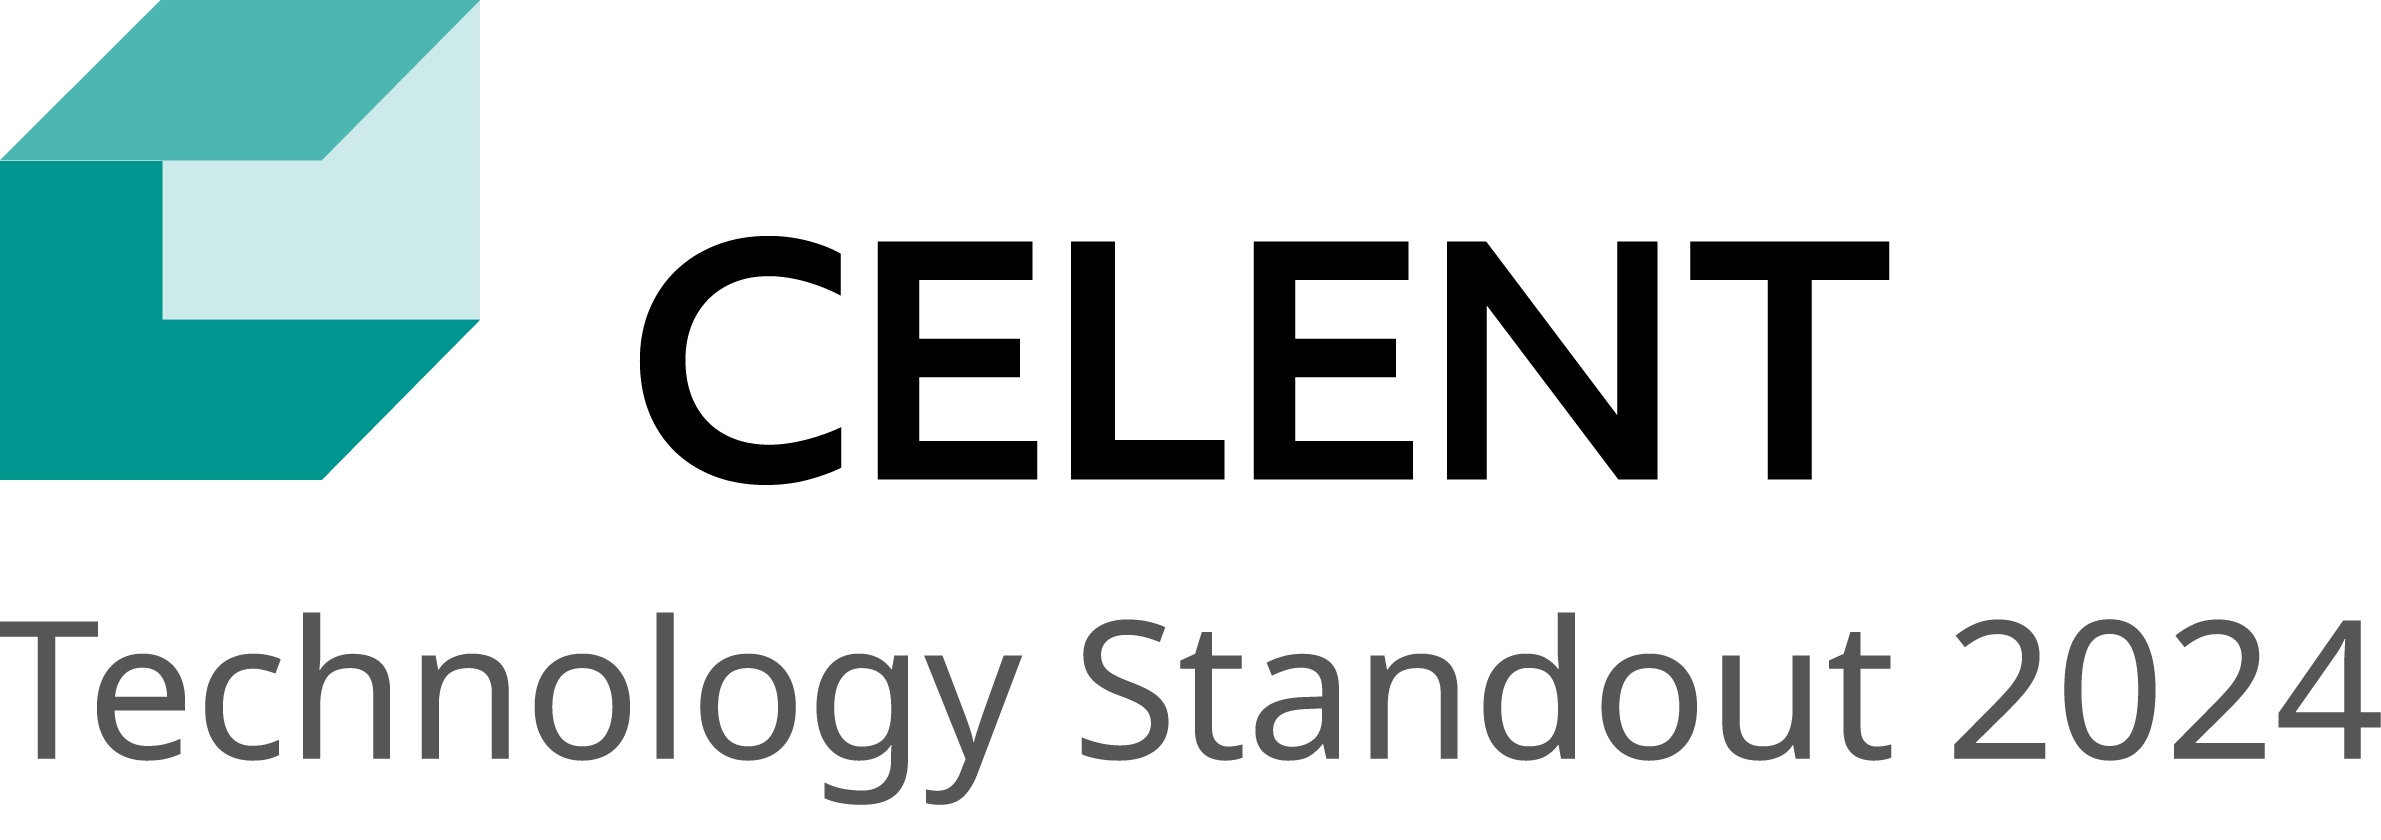 Celent Technology Standout 2024 logo